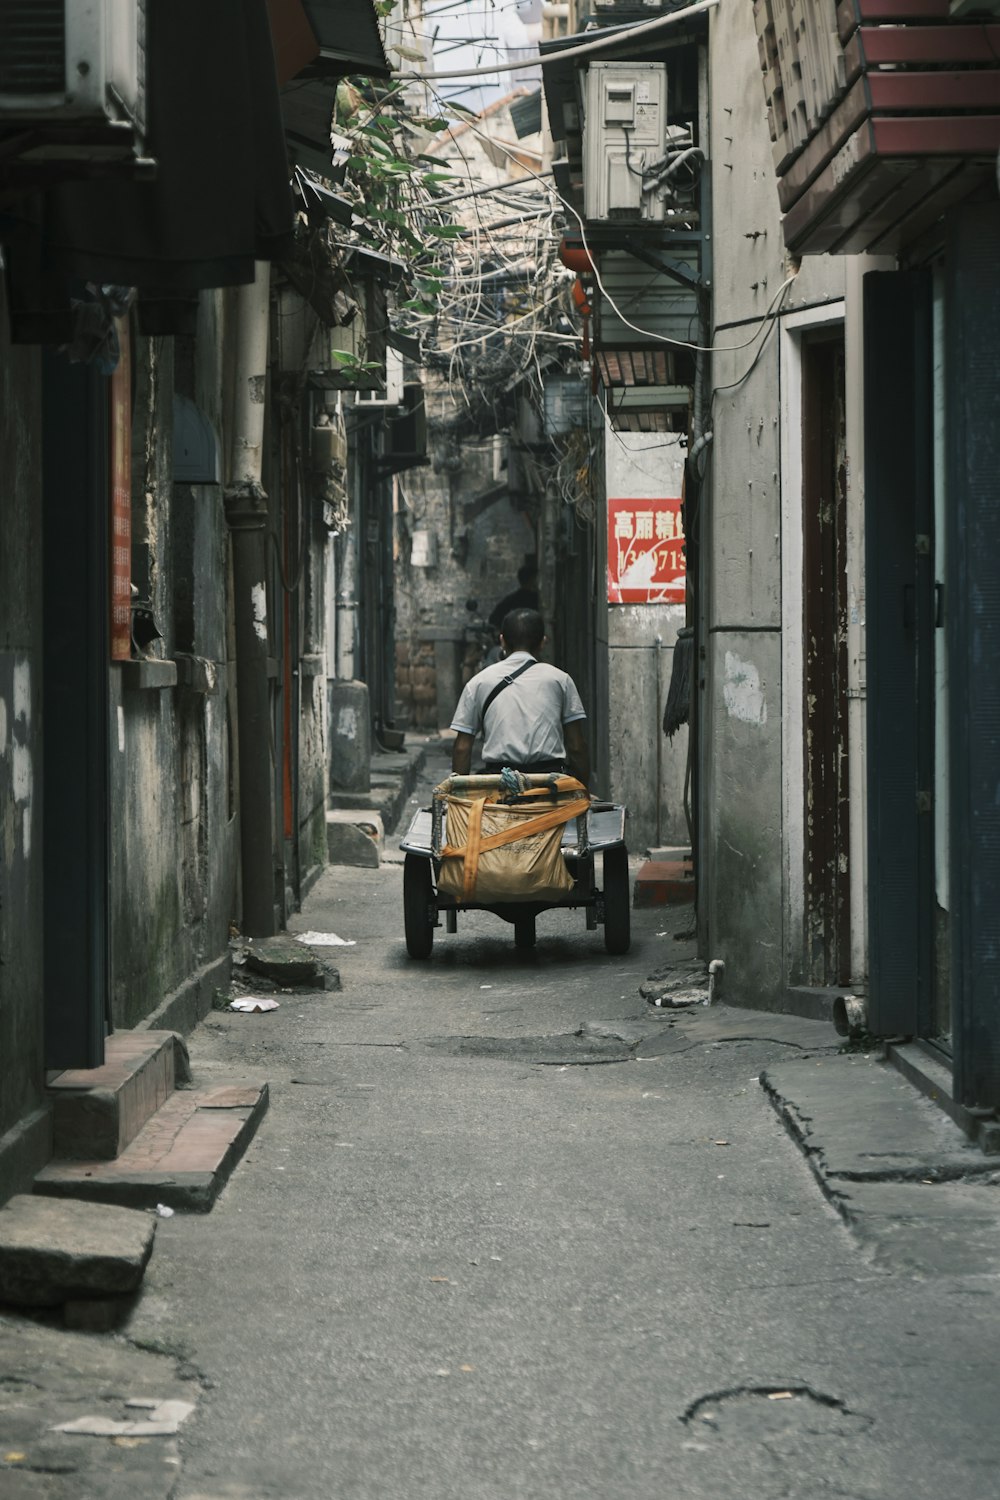 a man riding a cart down a narrow alley way